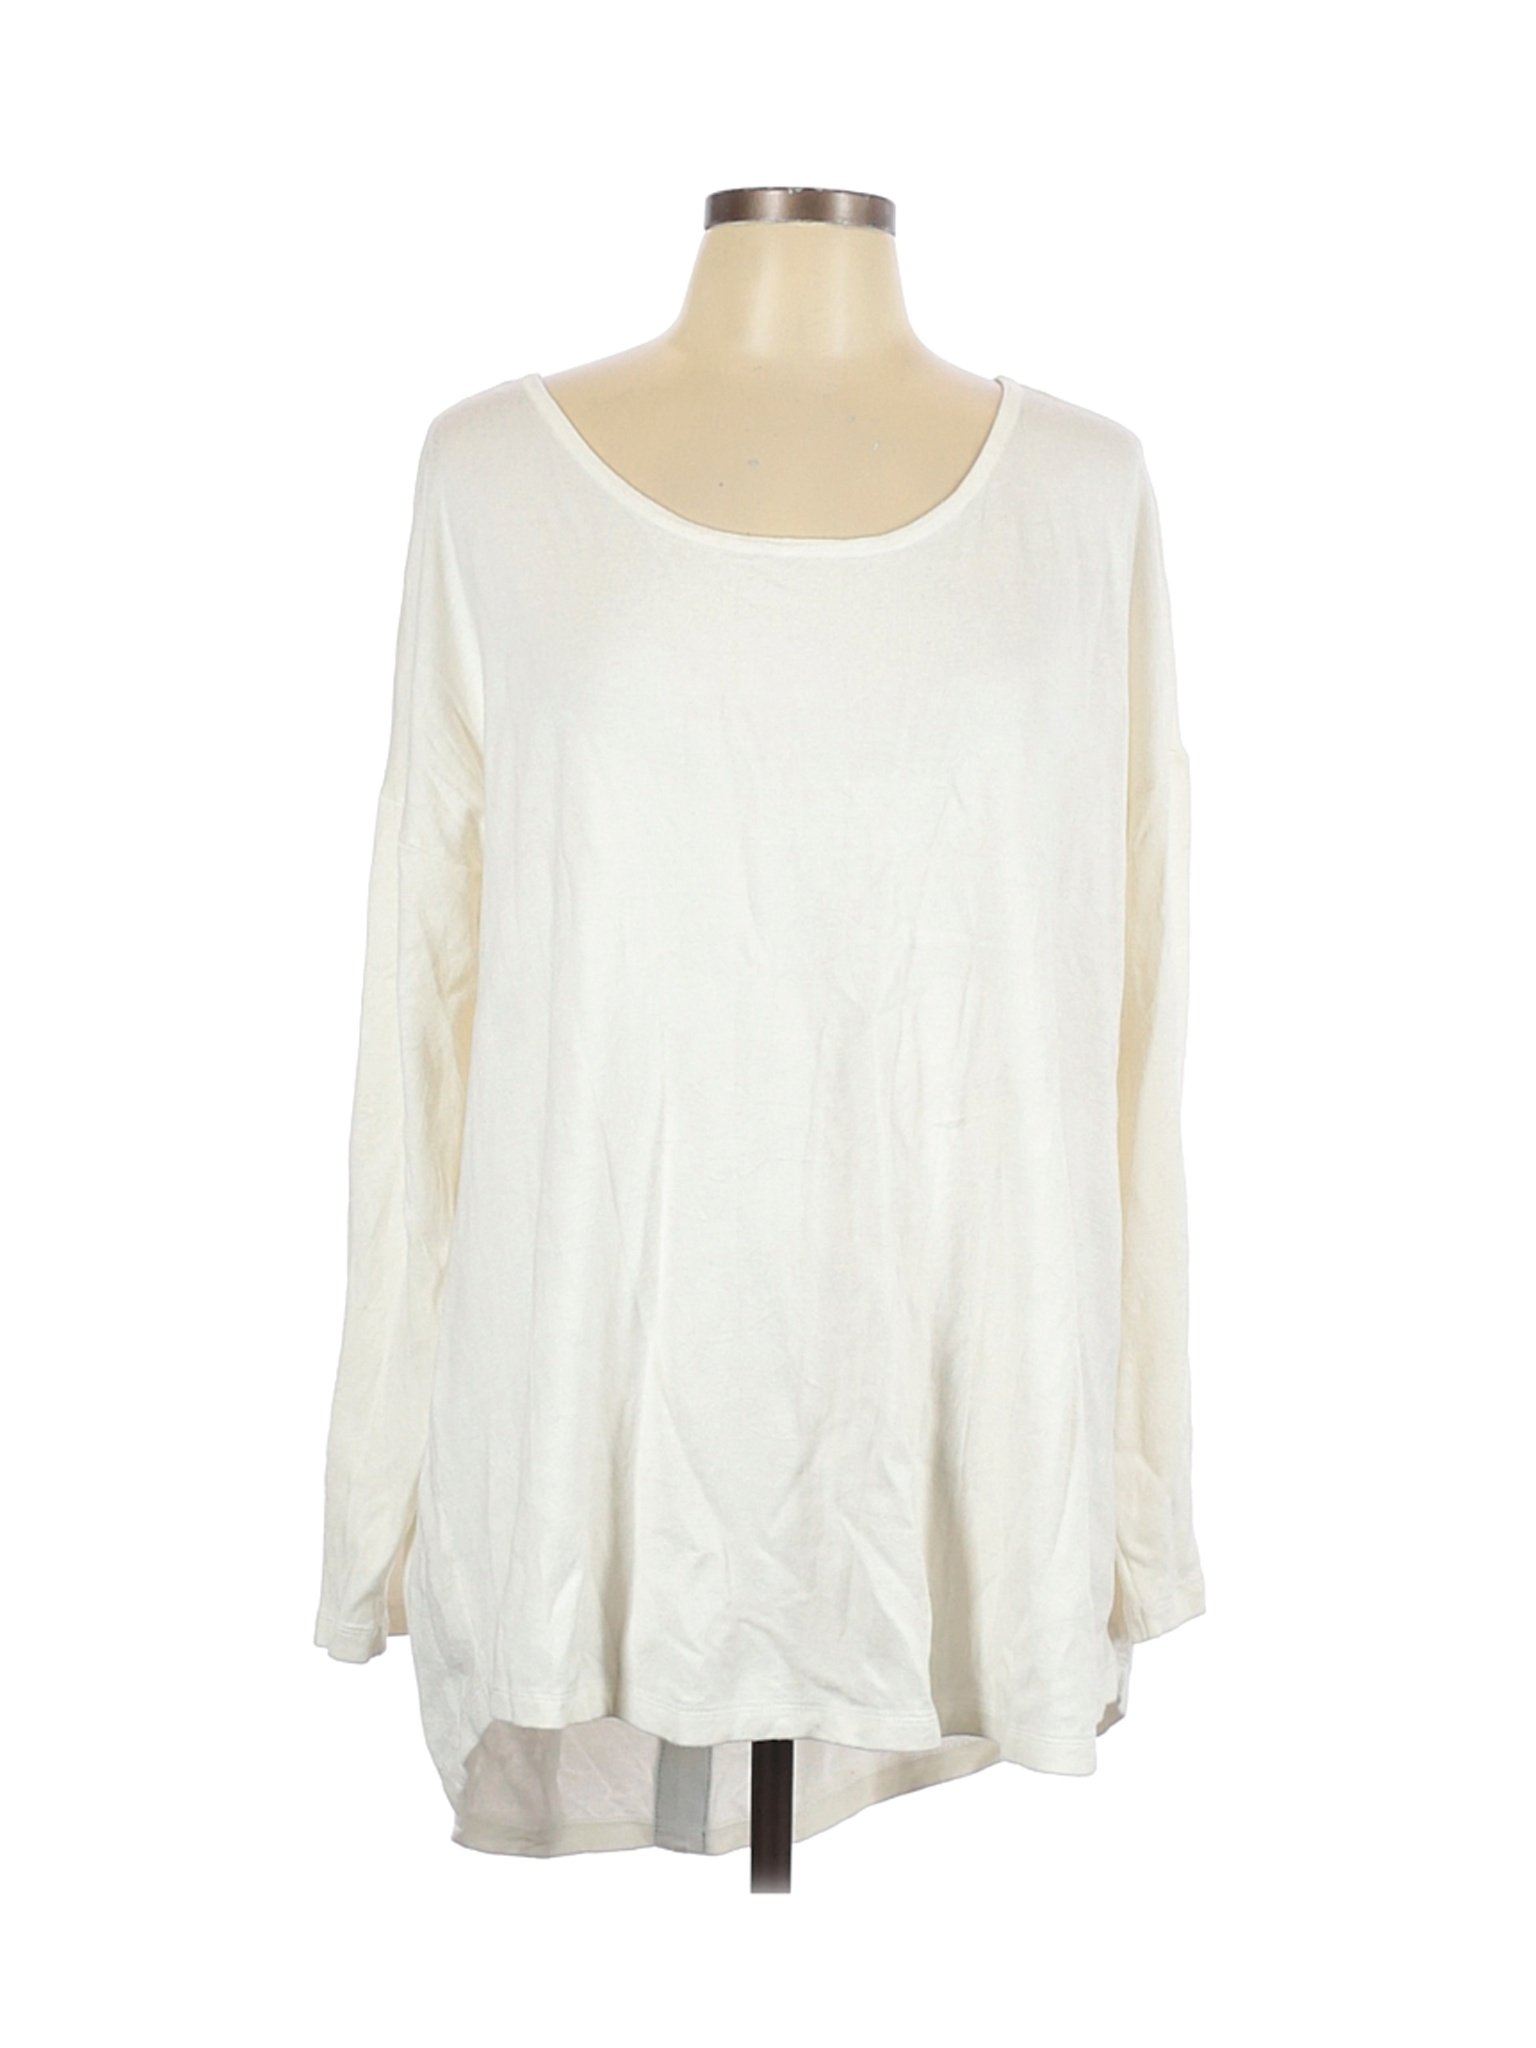 Soft Surroundings Women White Pullover Sweater L | eBay